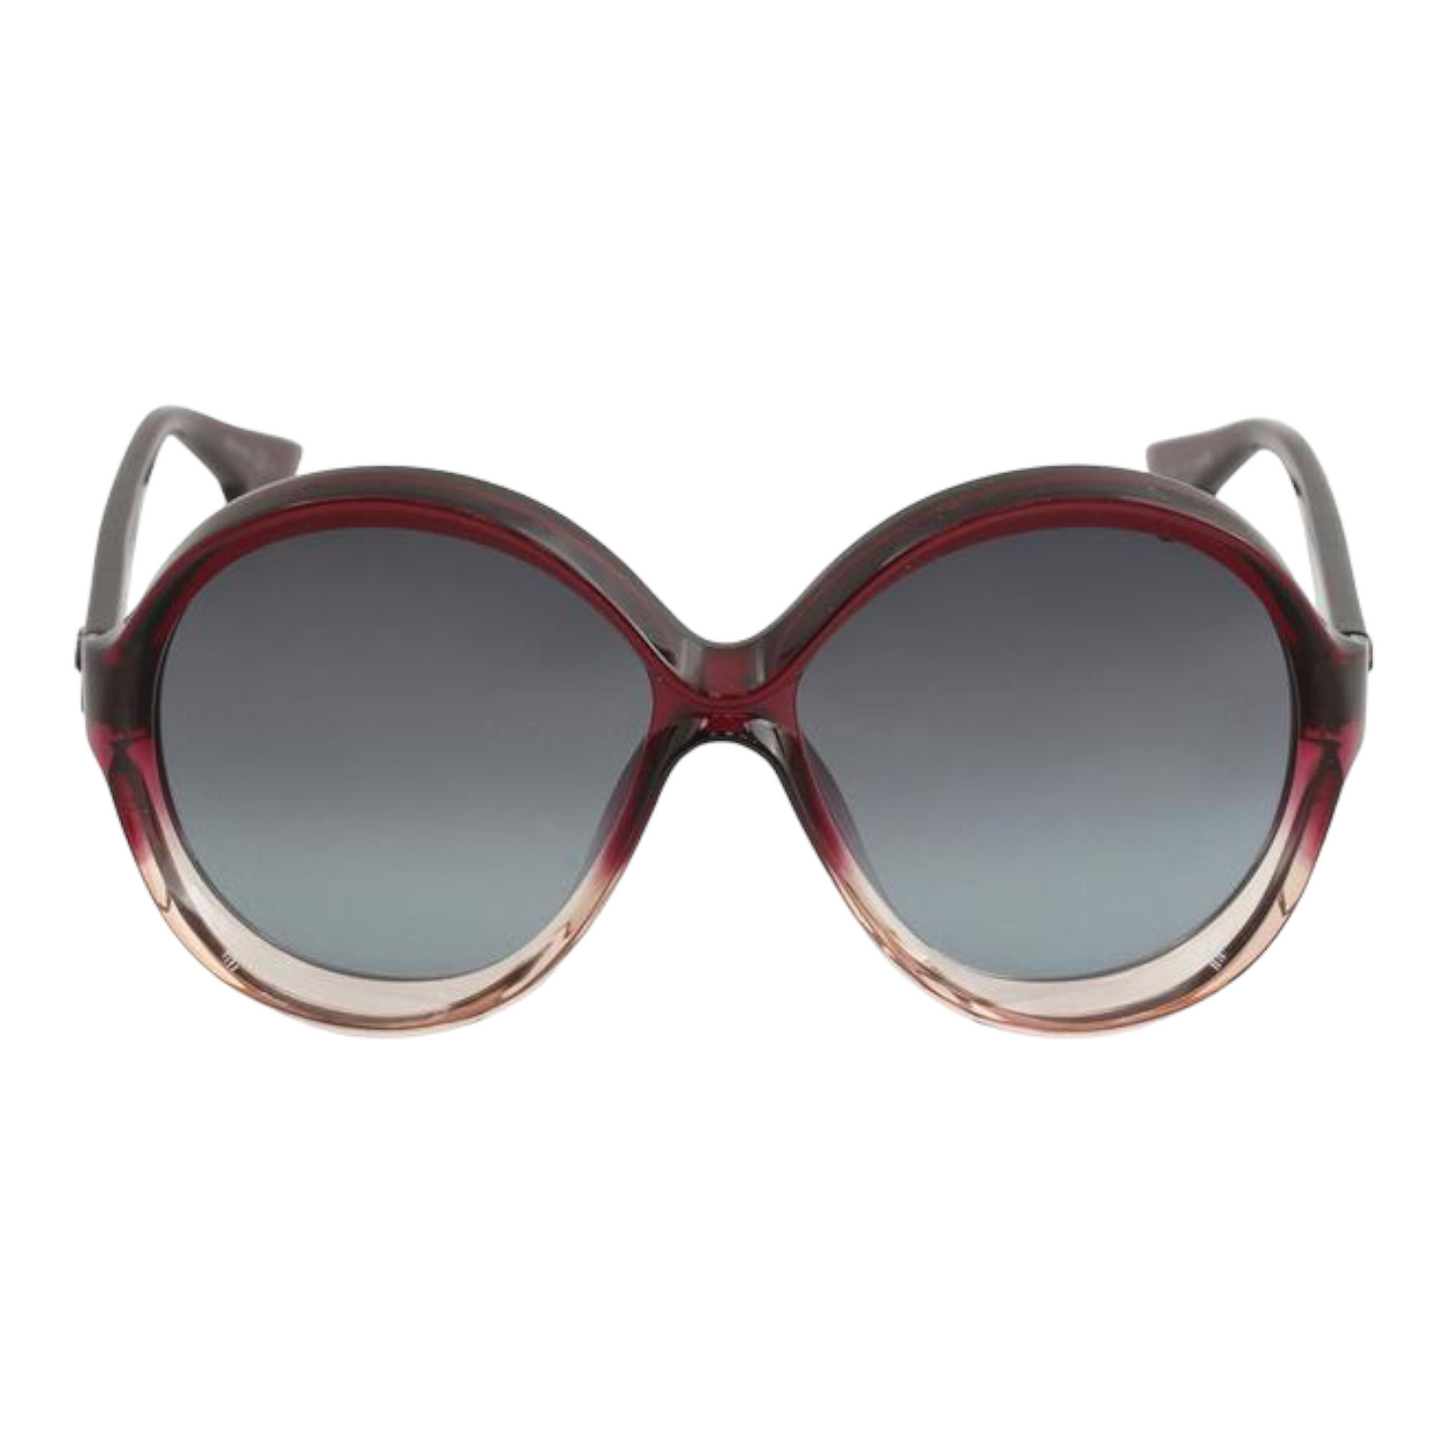 Christian Dior “Dior Bianca” Fashion Round Sunglasses